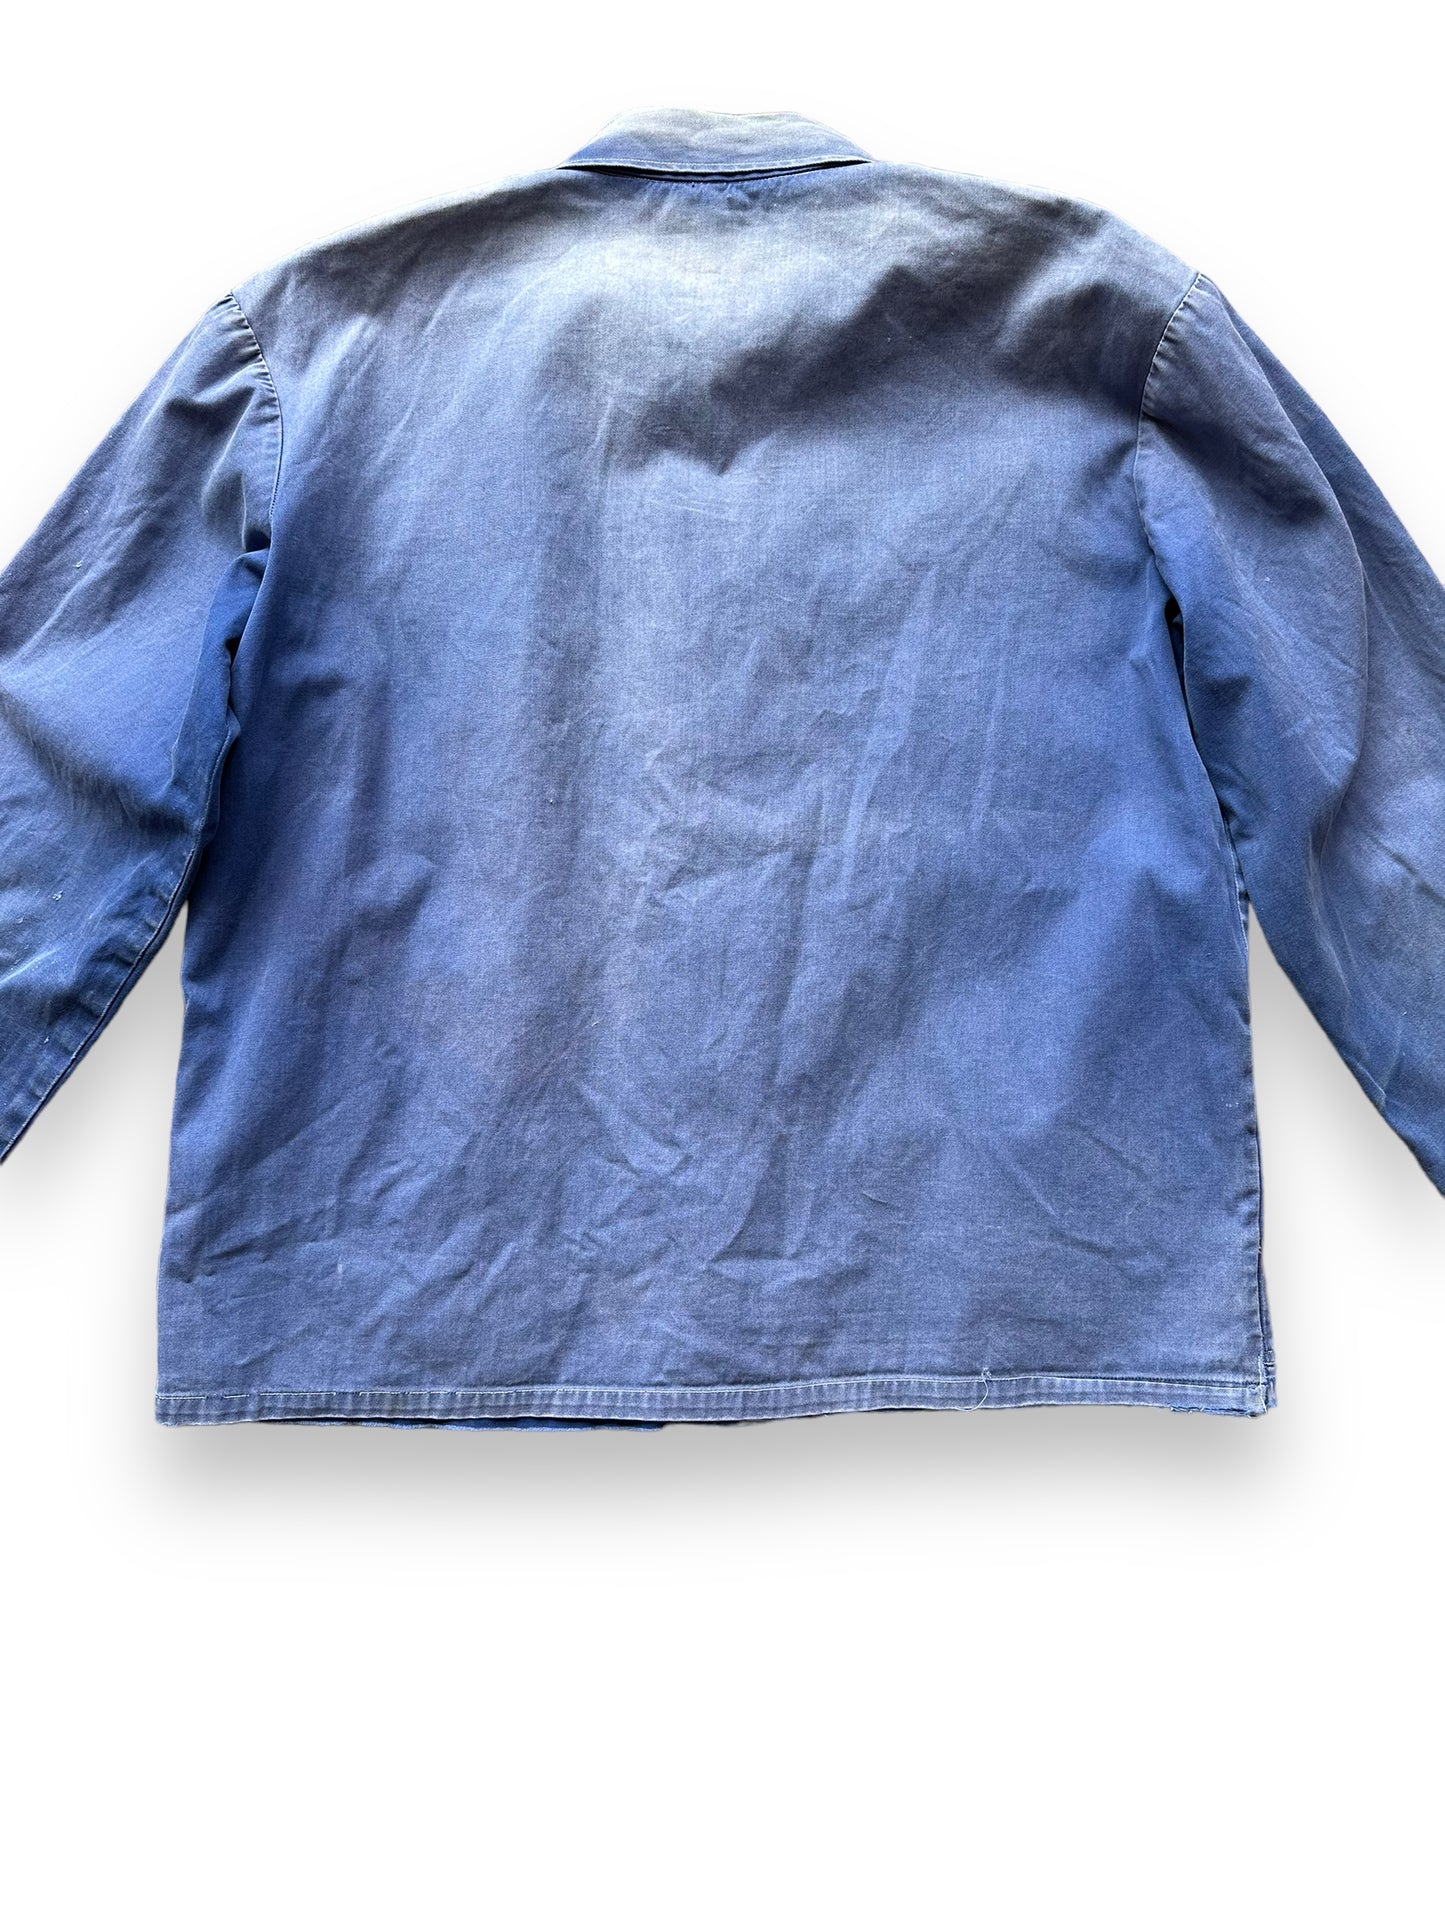 Rear Detail on Vintage Faded French Workwear Chore Coat SZ L | Vintage European Workwear Seattle | Barn Owl Vintage Goods Seattle